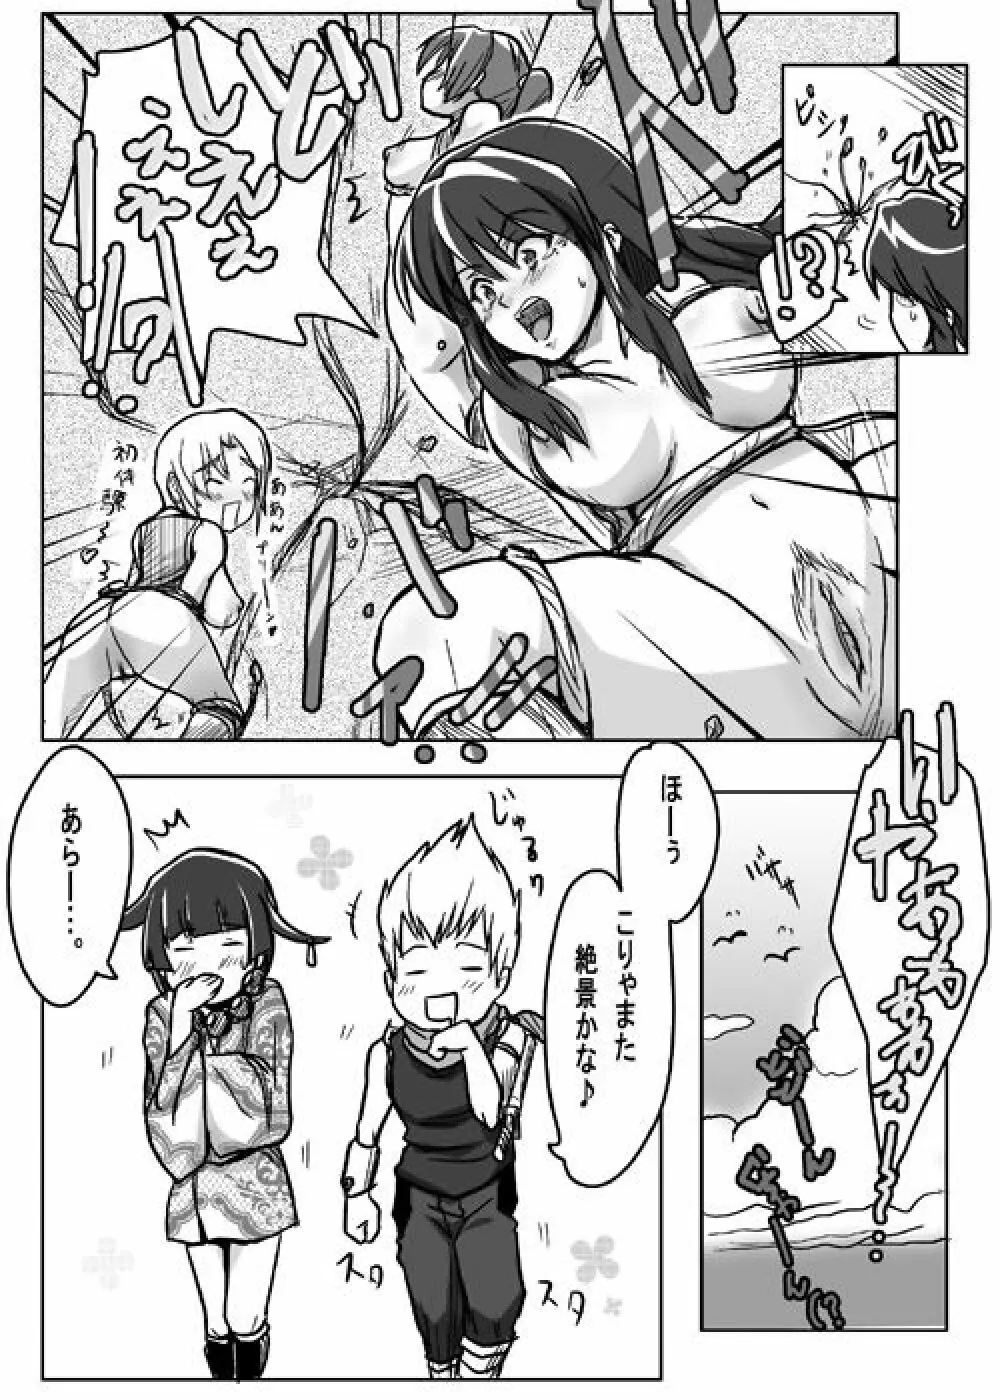 Same-themed manga about kid fighting female ninjas from japanese imageboard. 55ページ